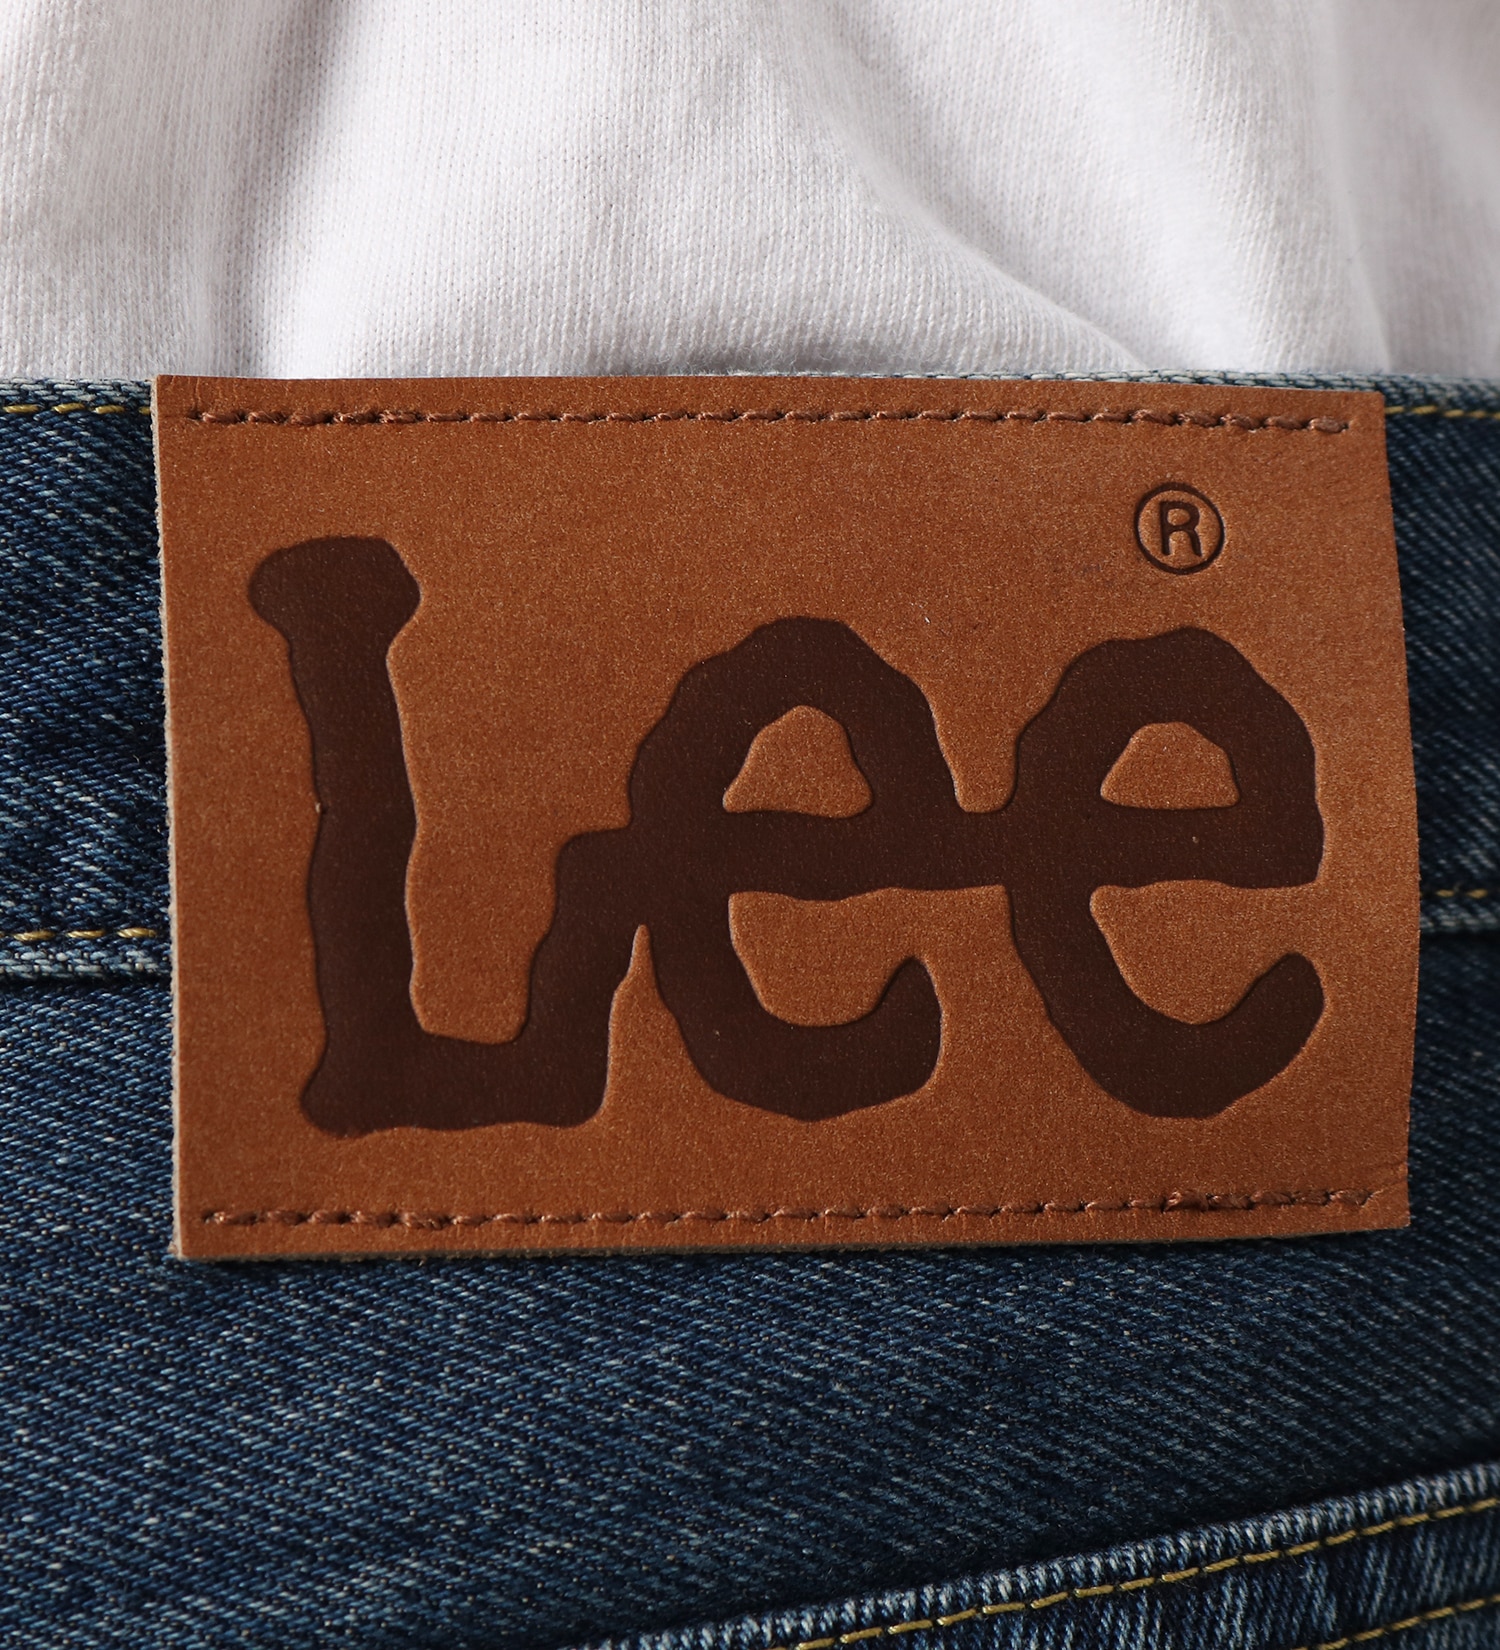 Lee(リー)のAMERICAN STANDARD 102 ブーツカットジーンズ|パンツ/デニムパンツ/メンズ|中色ブルー